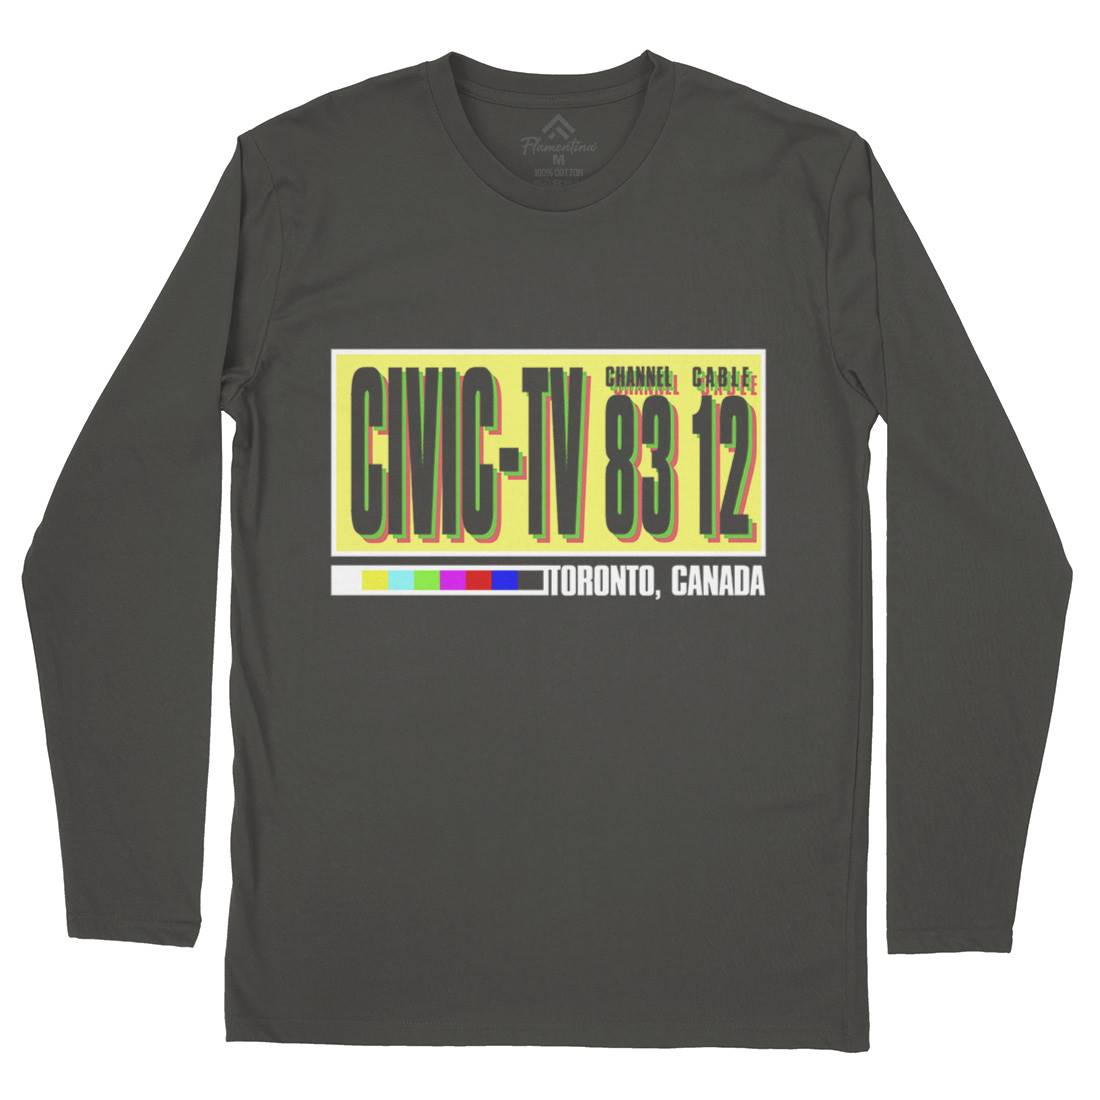 Civic-Tv Mens Long Sleeve T-Shirt Media D406